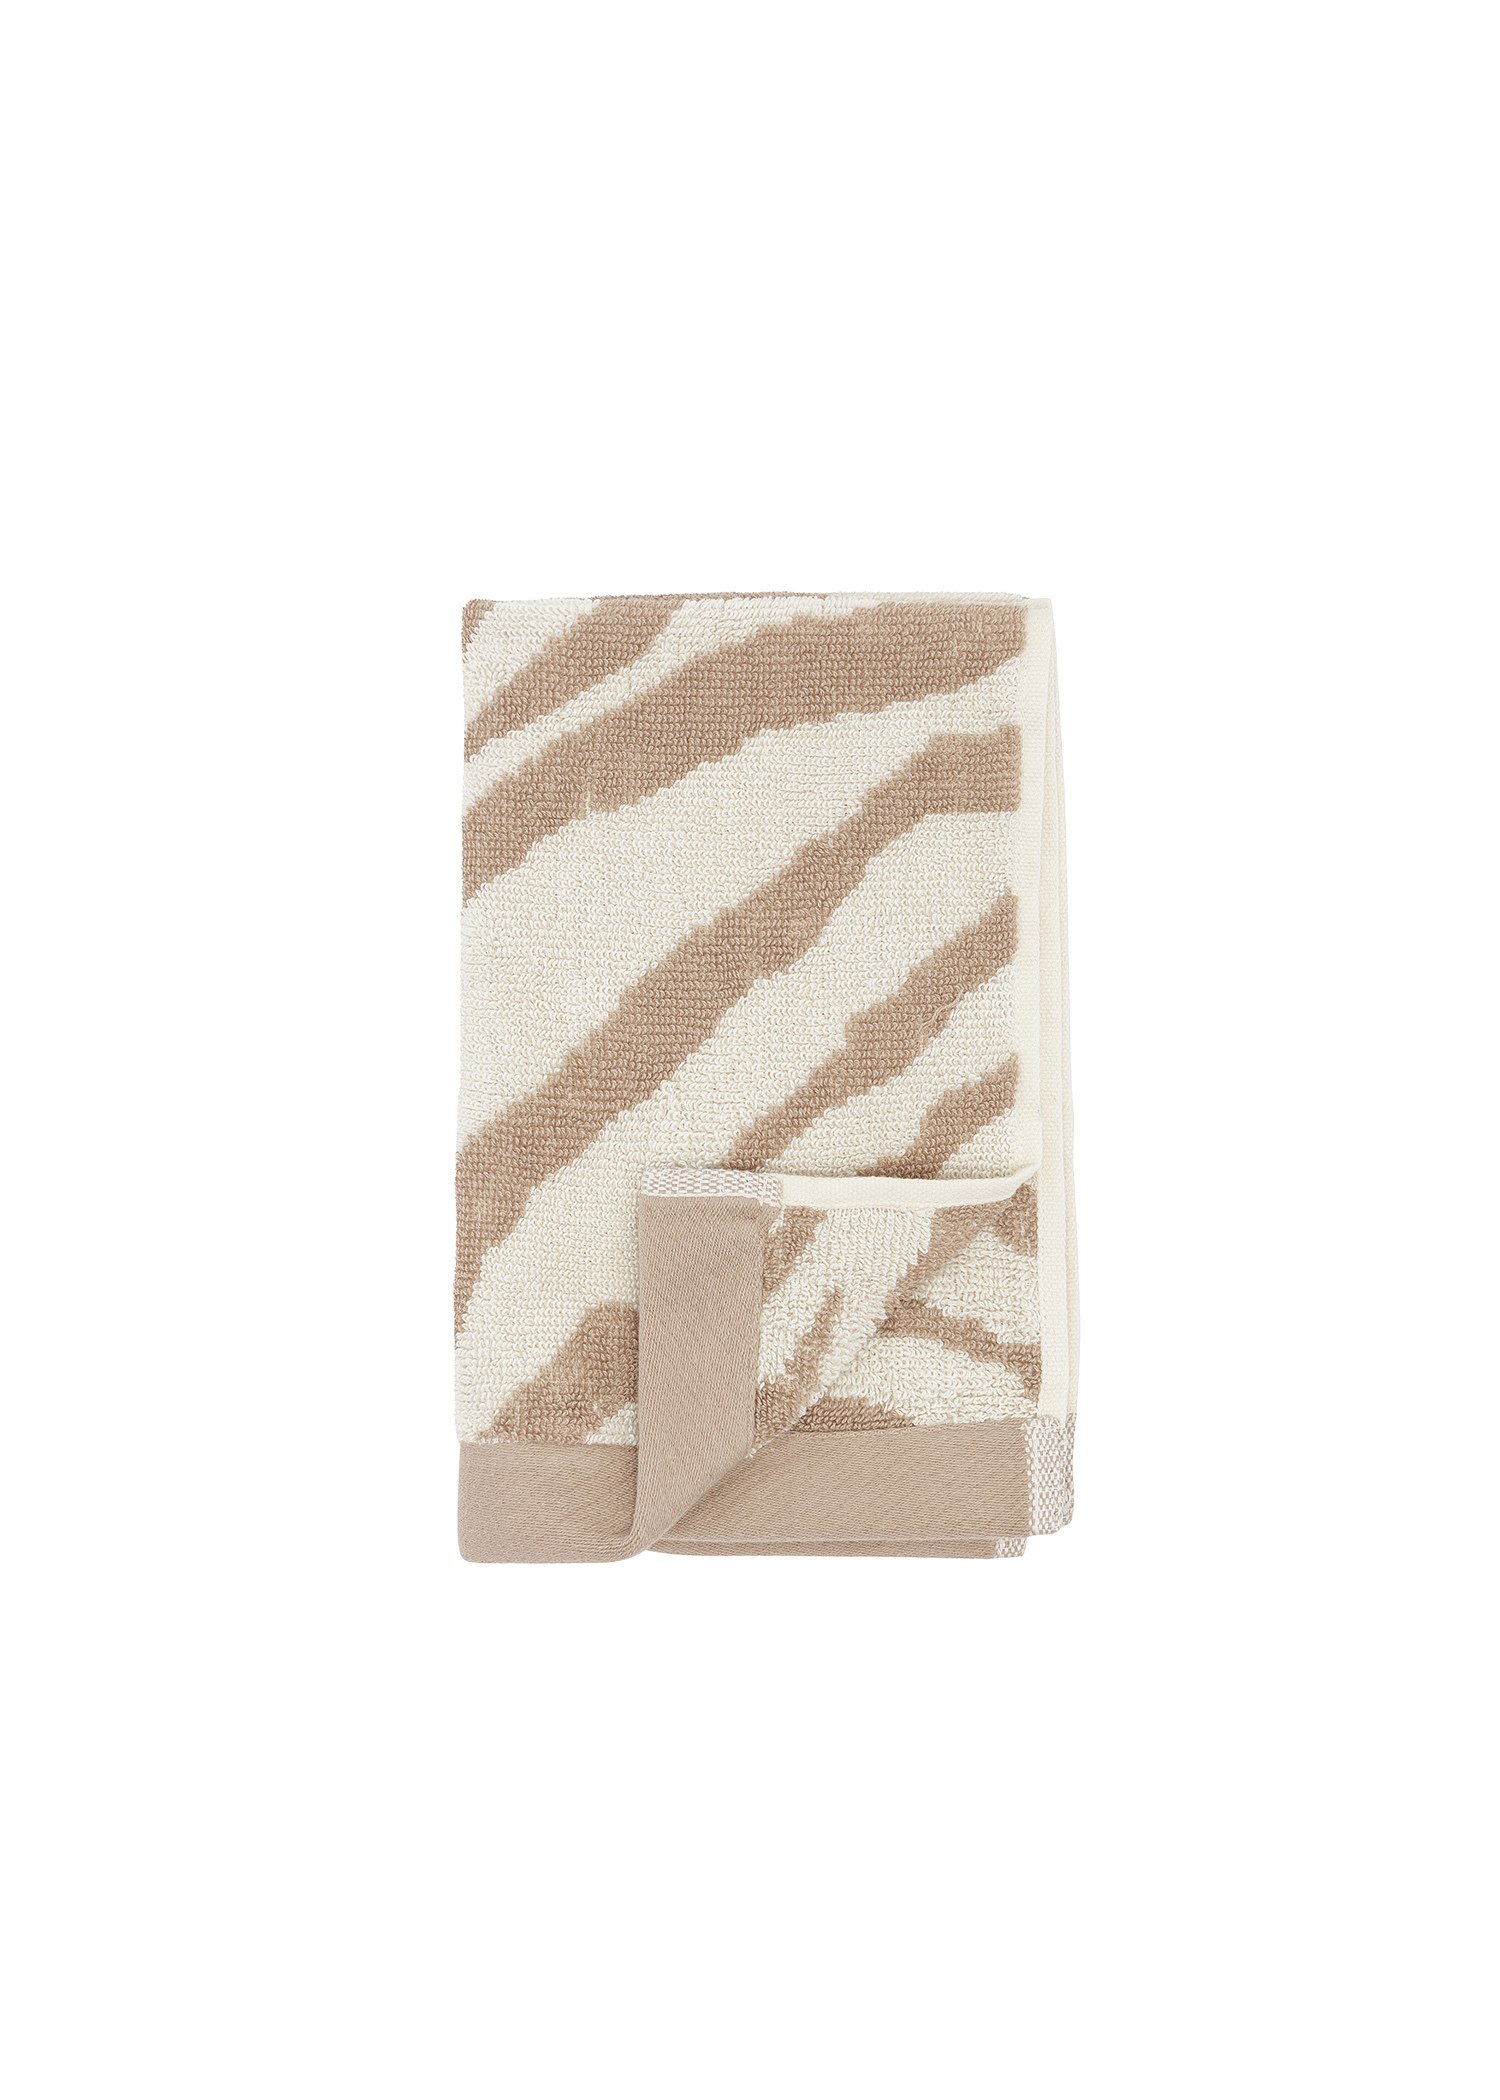 Zebra patterned face towel